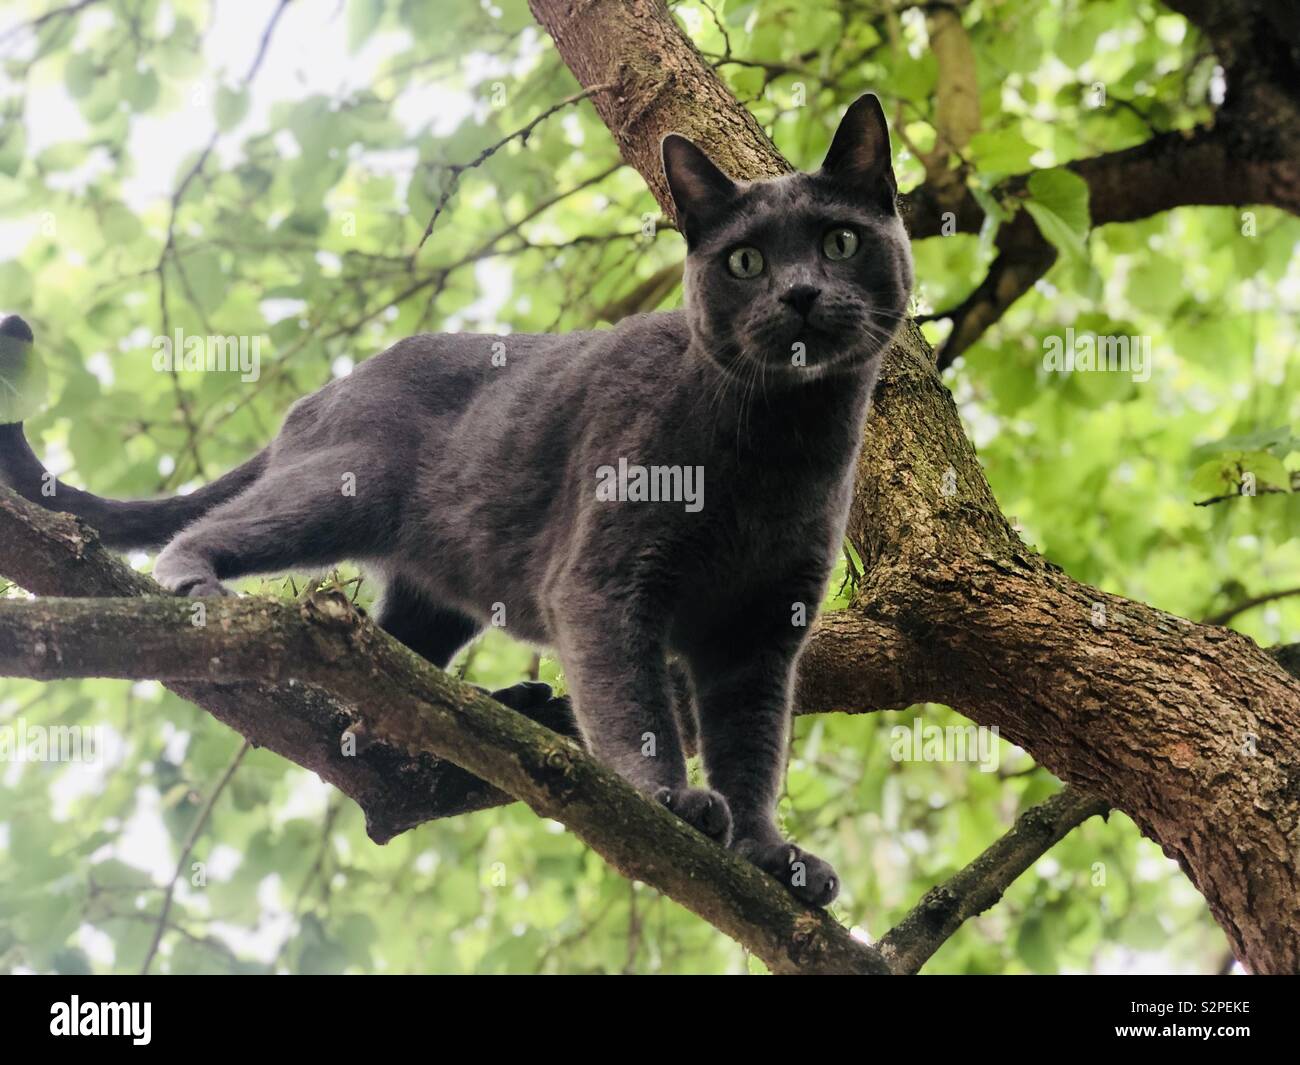 Cat on tree Stock Photo